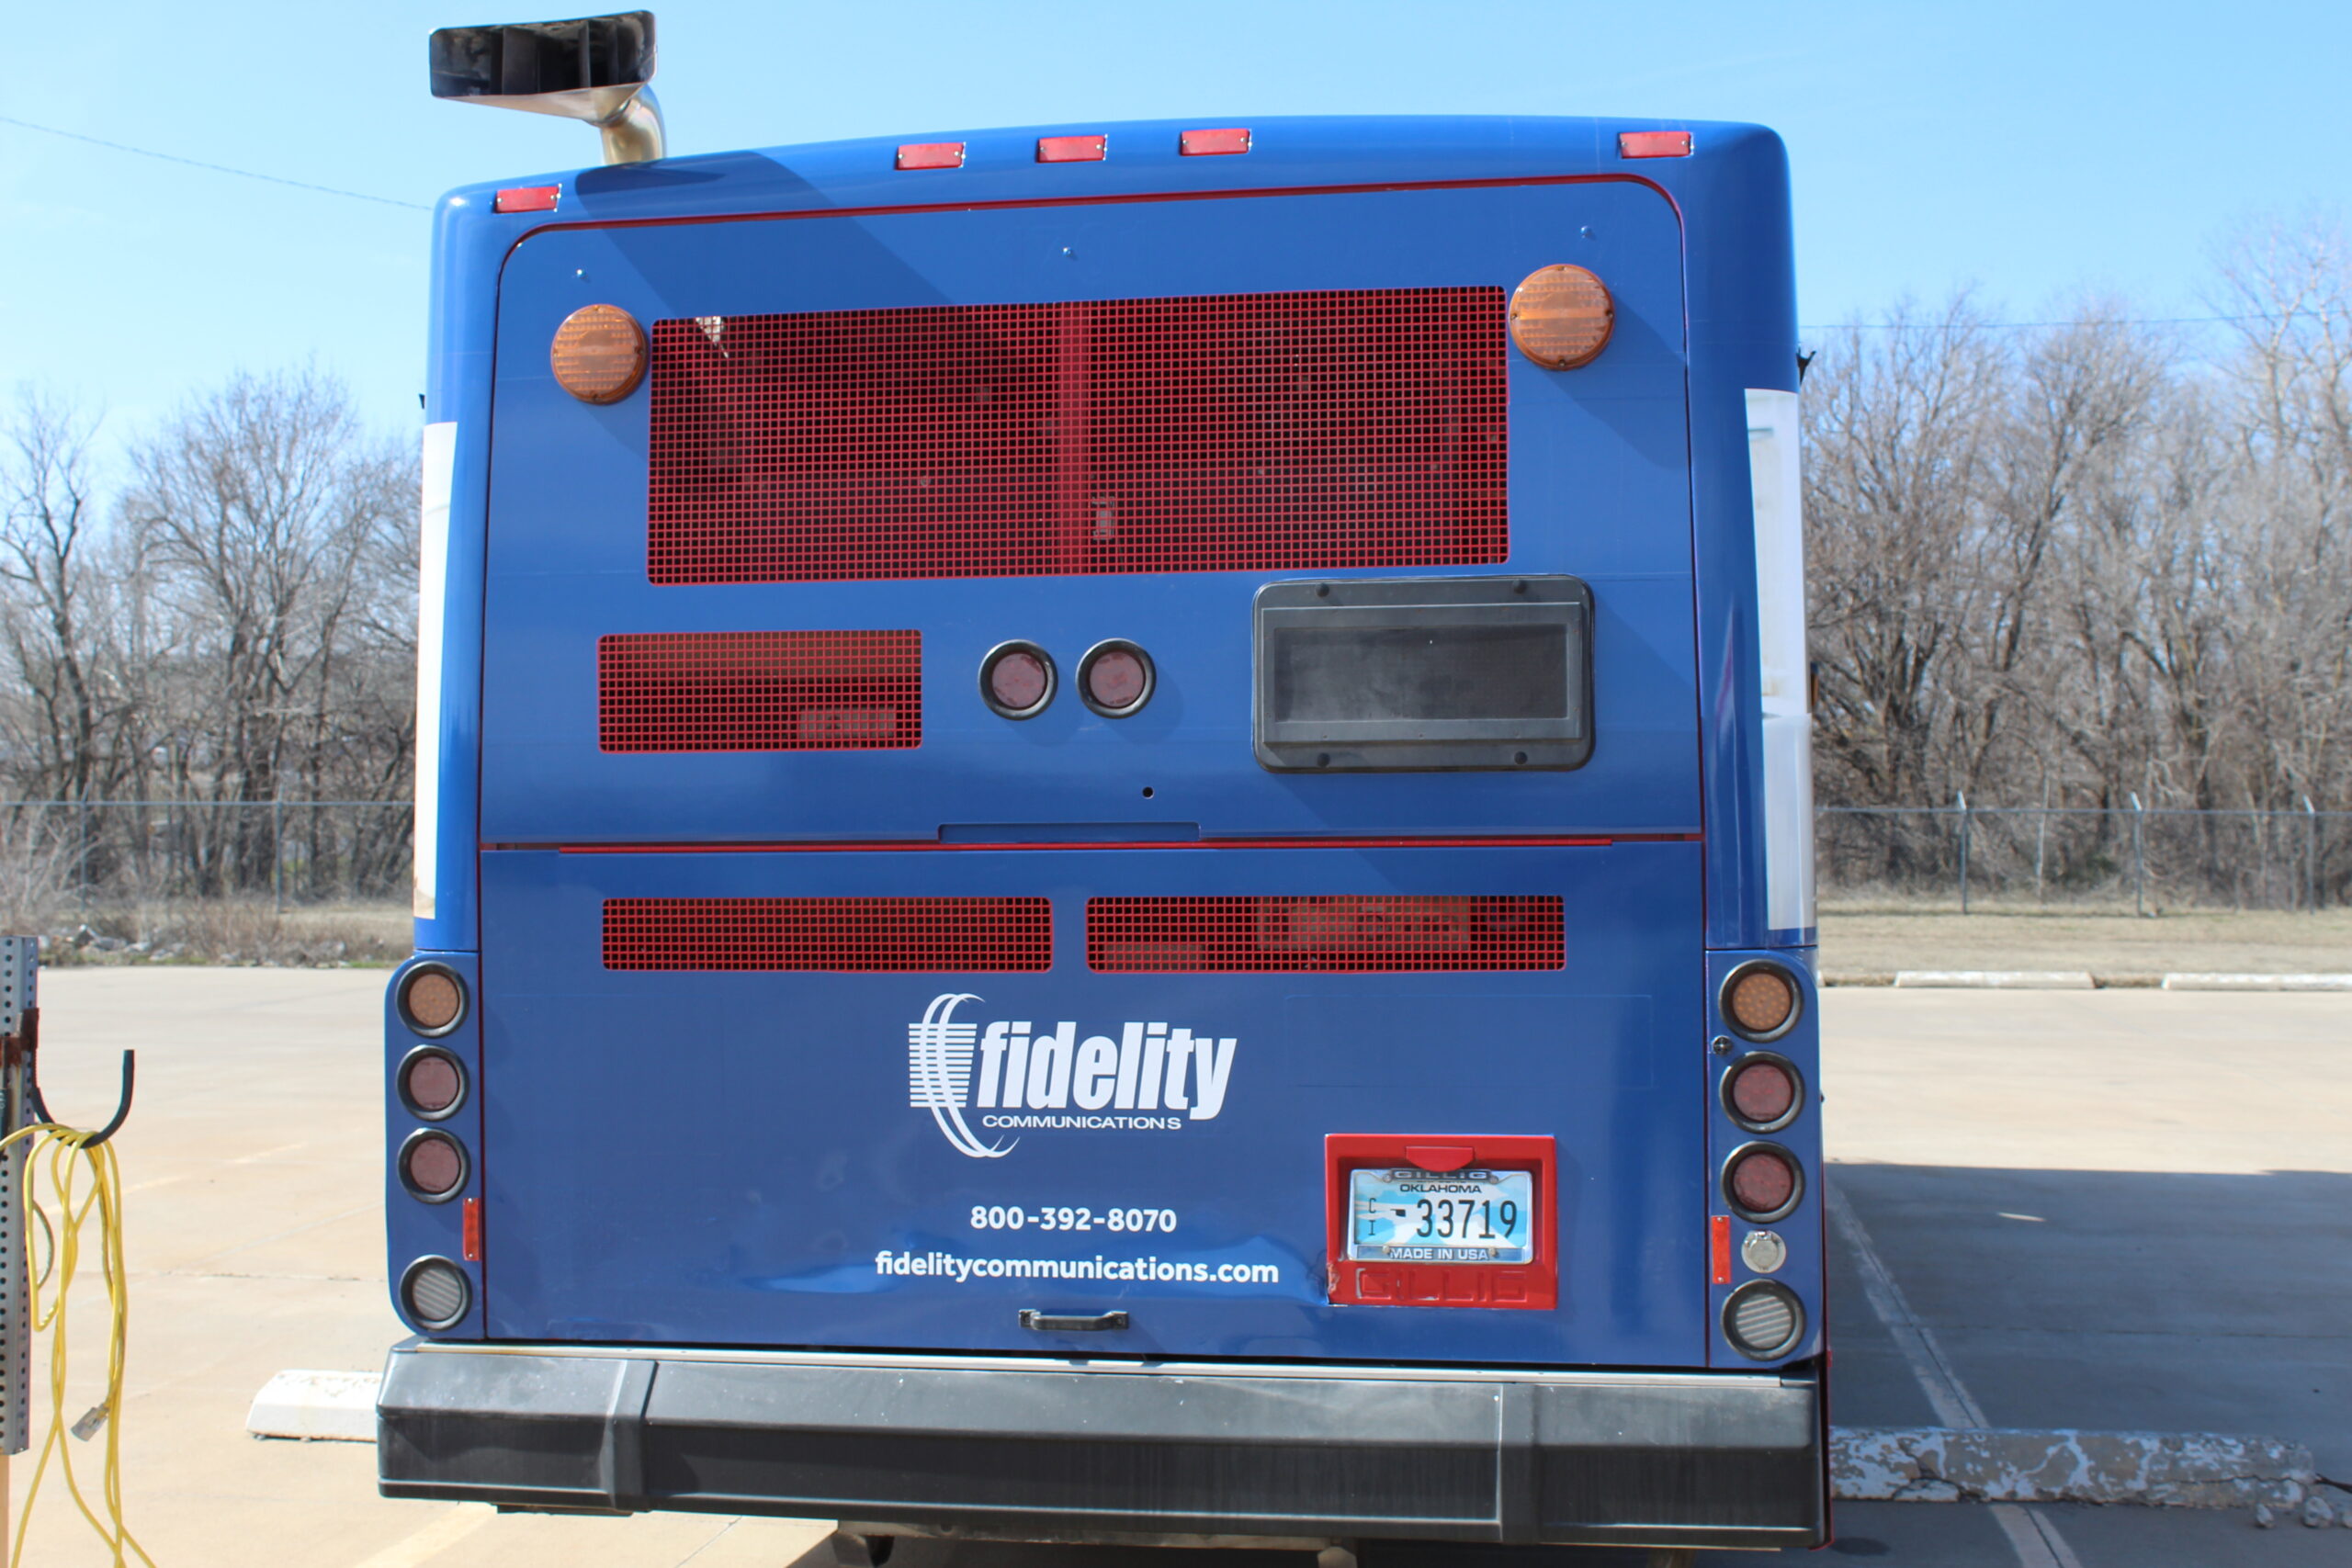 Fidelity Internet Provider bus rear